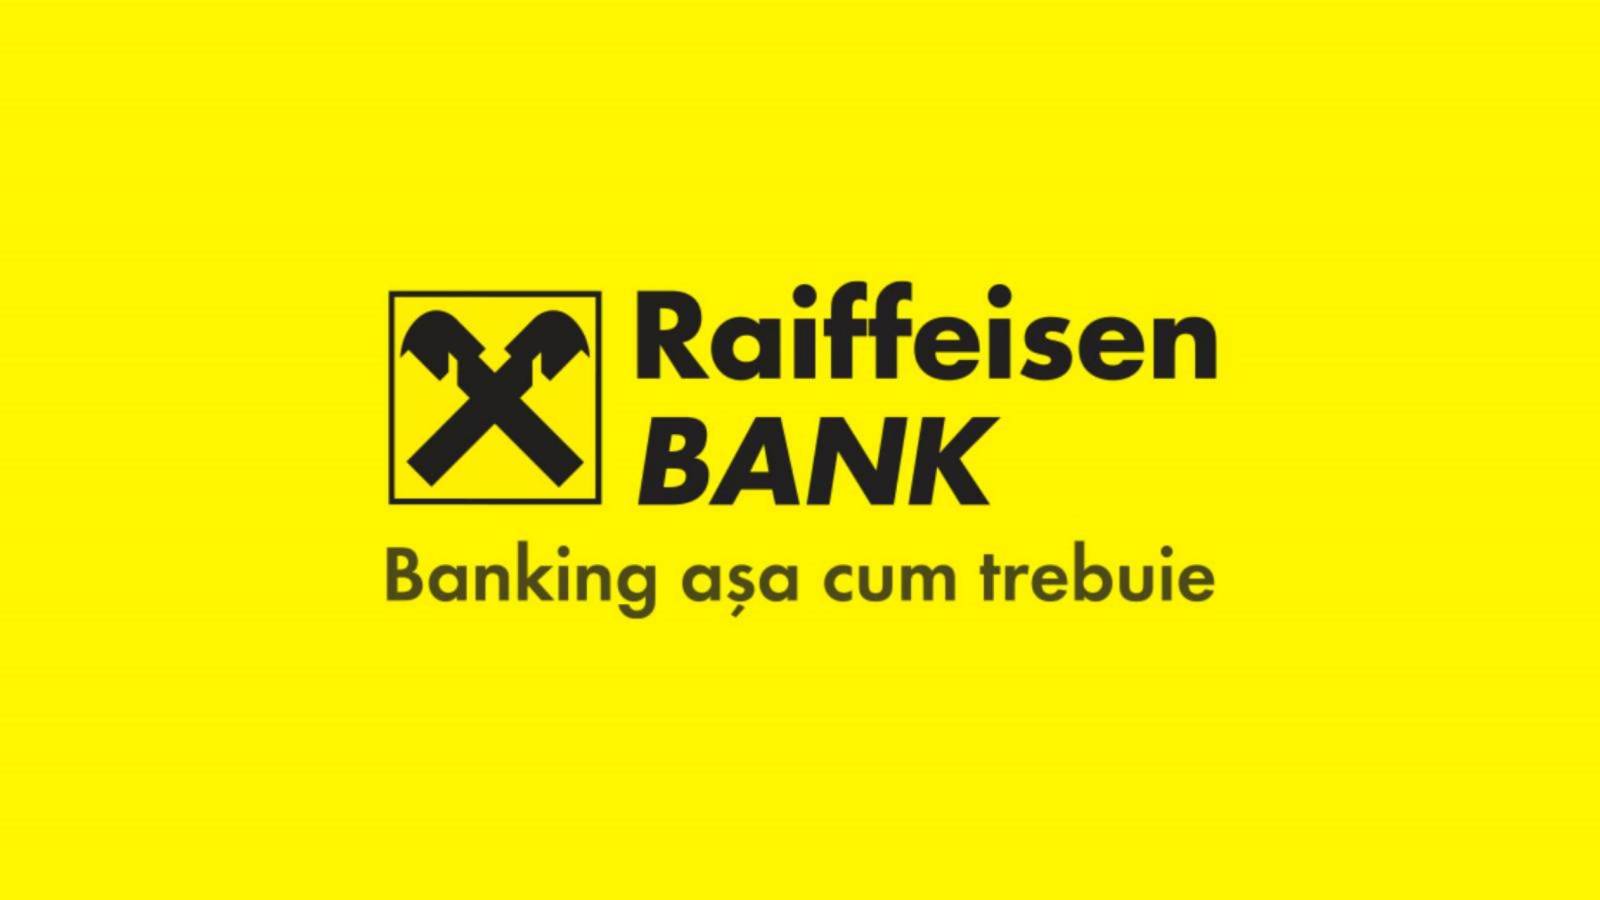 Banco Raiffeisen inteligente